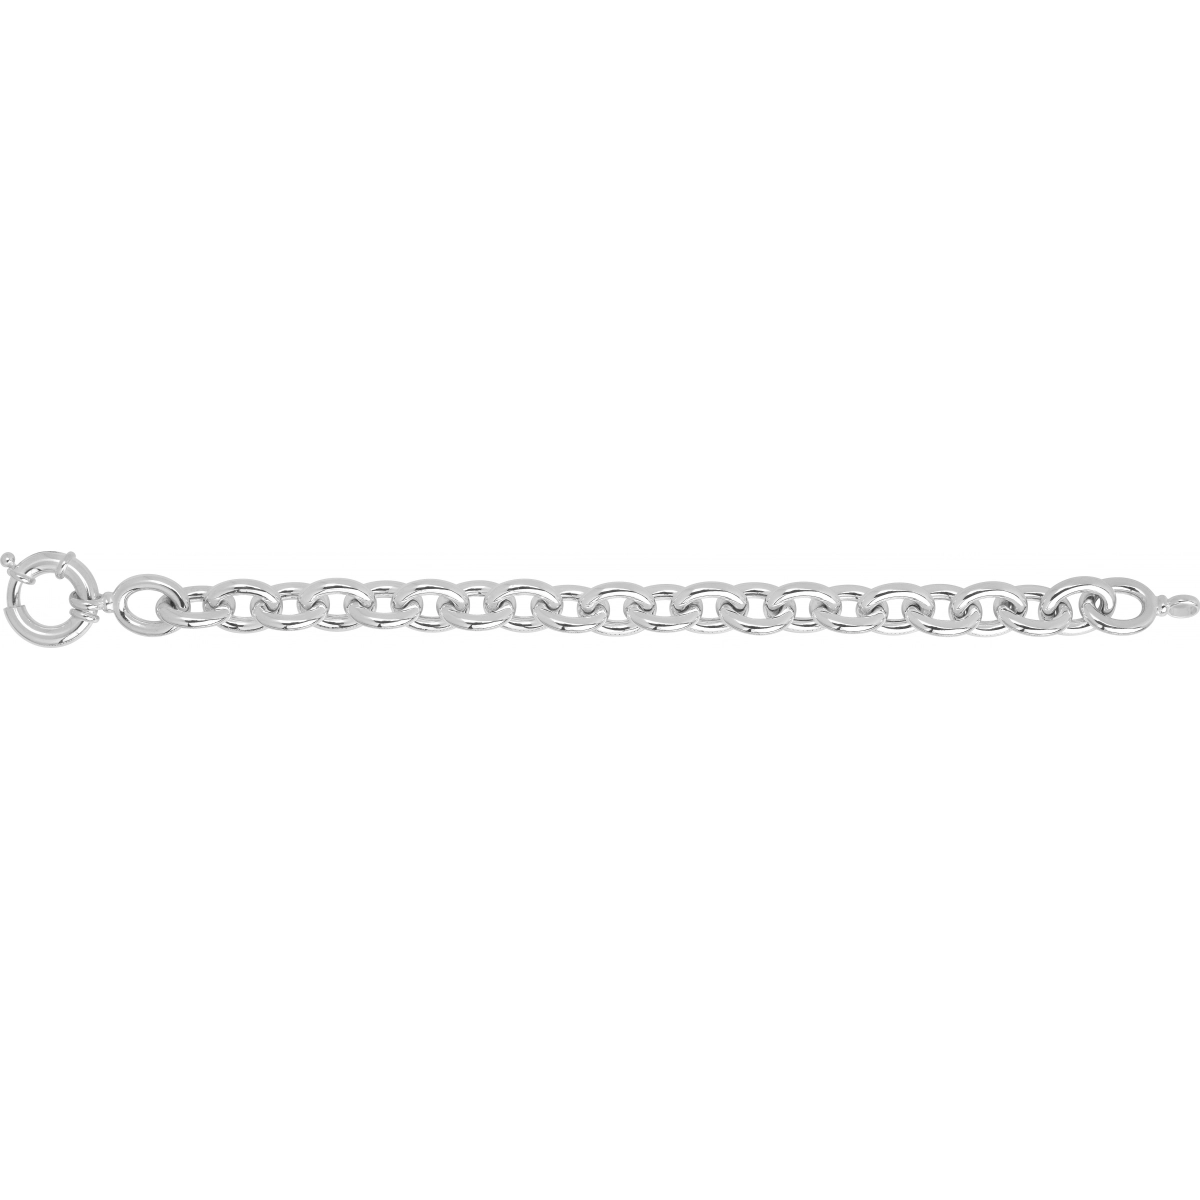 Bracelet rh925 Silver - Size: 20  Lua Blanca  301571B.20